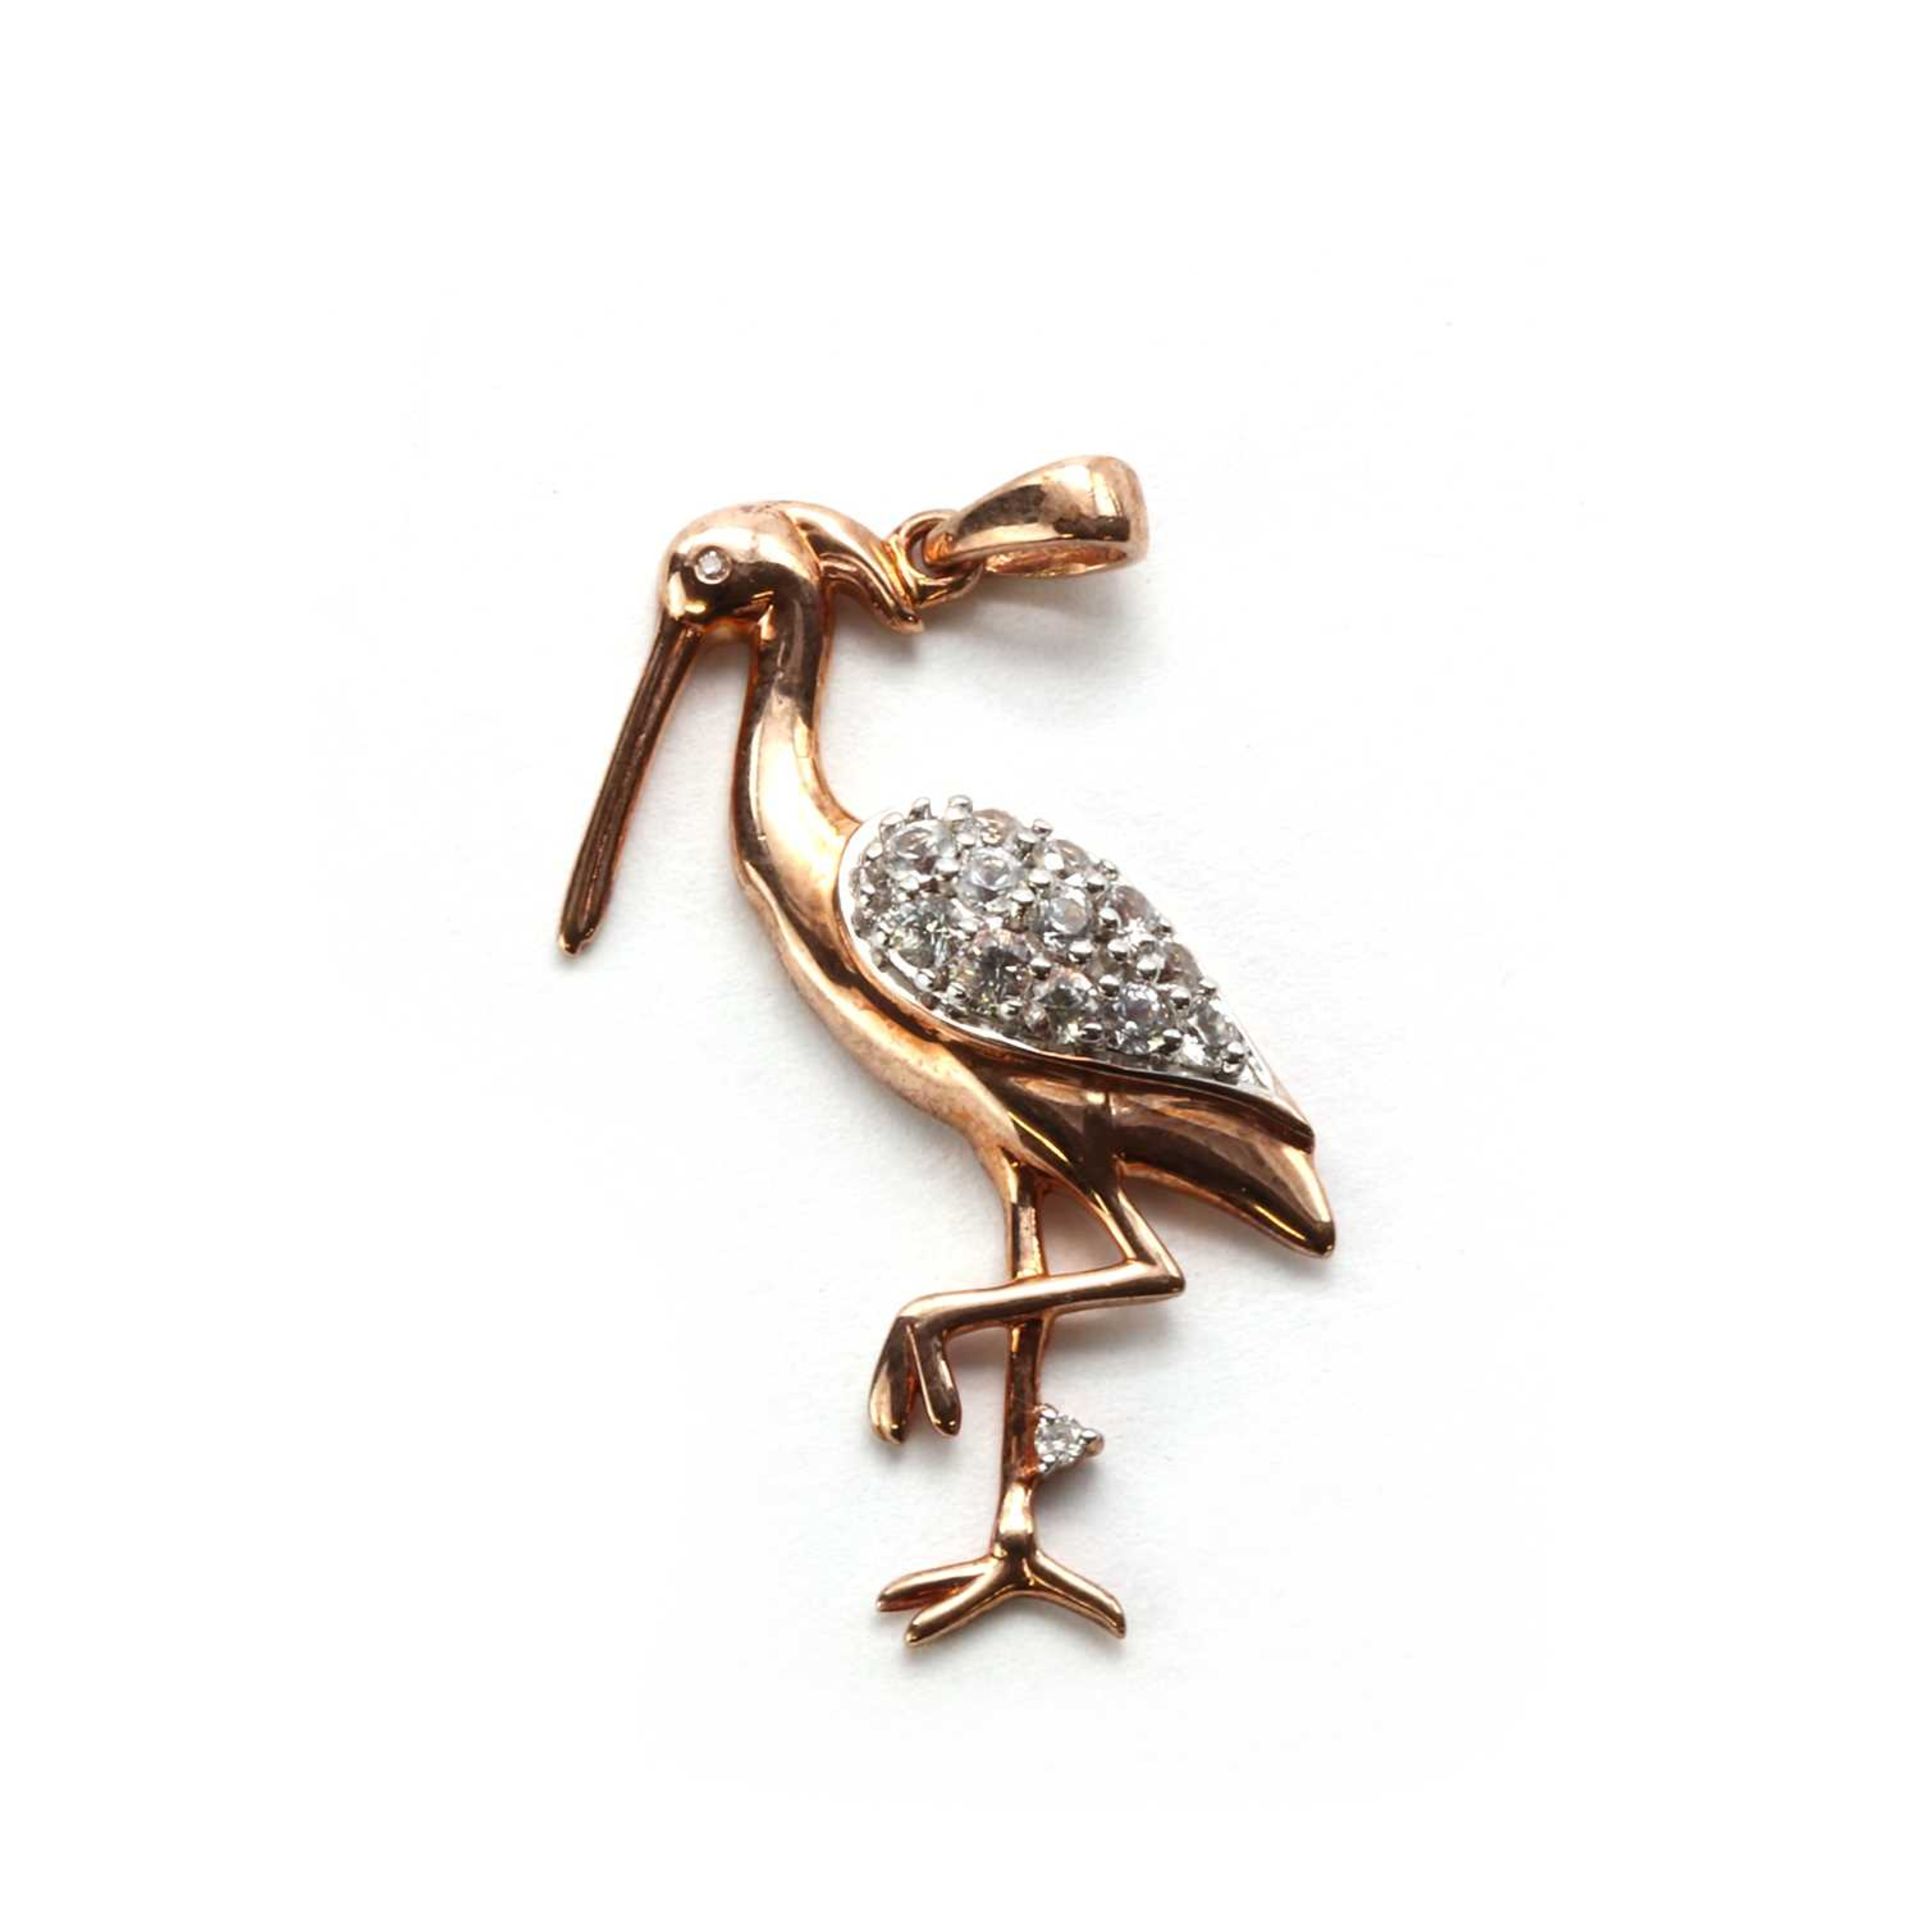 A 9ct rose gold novelty pendant,